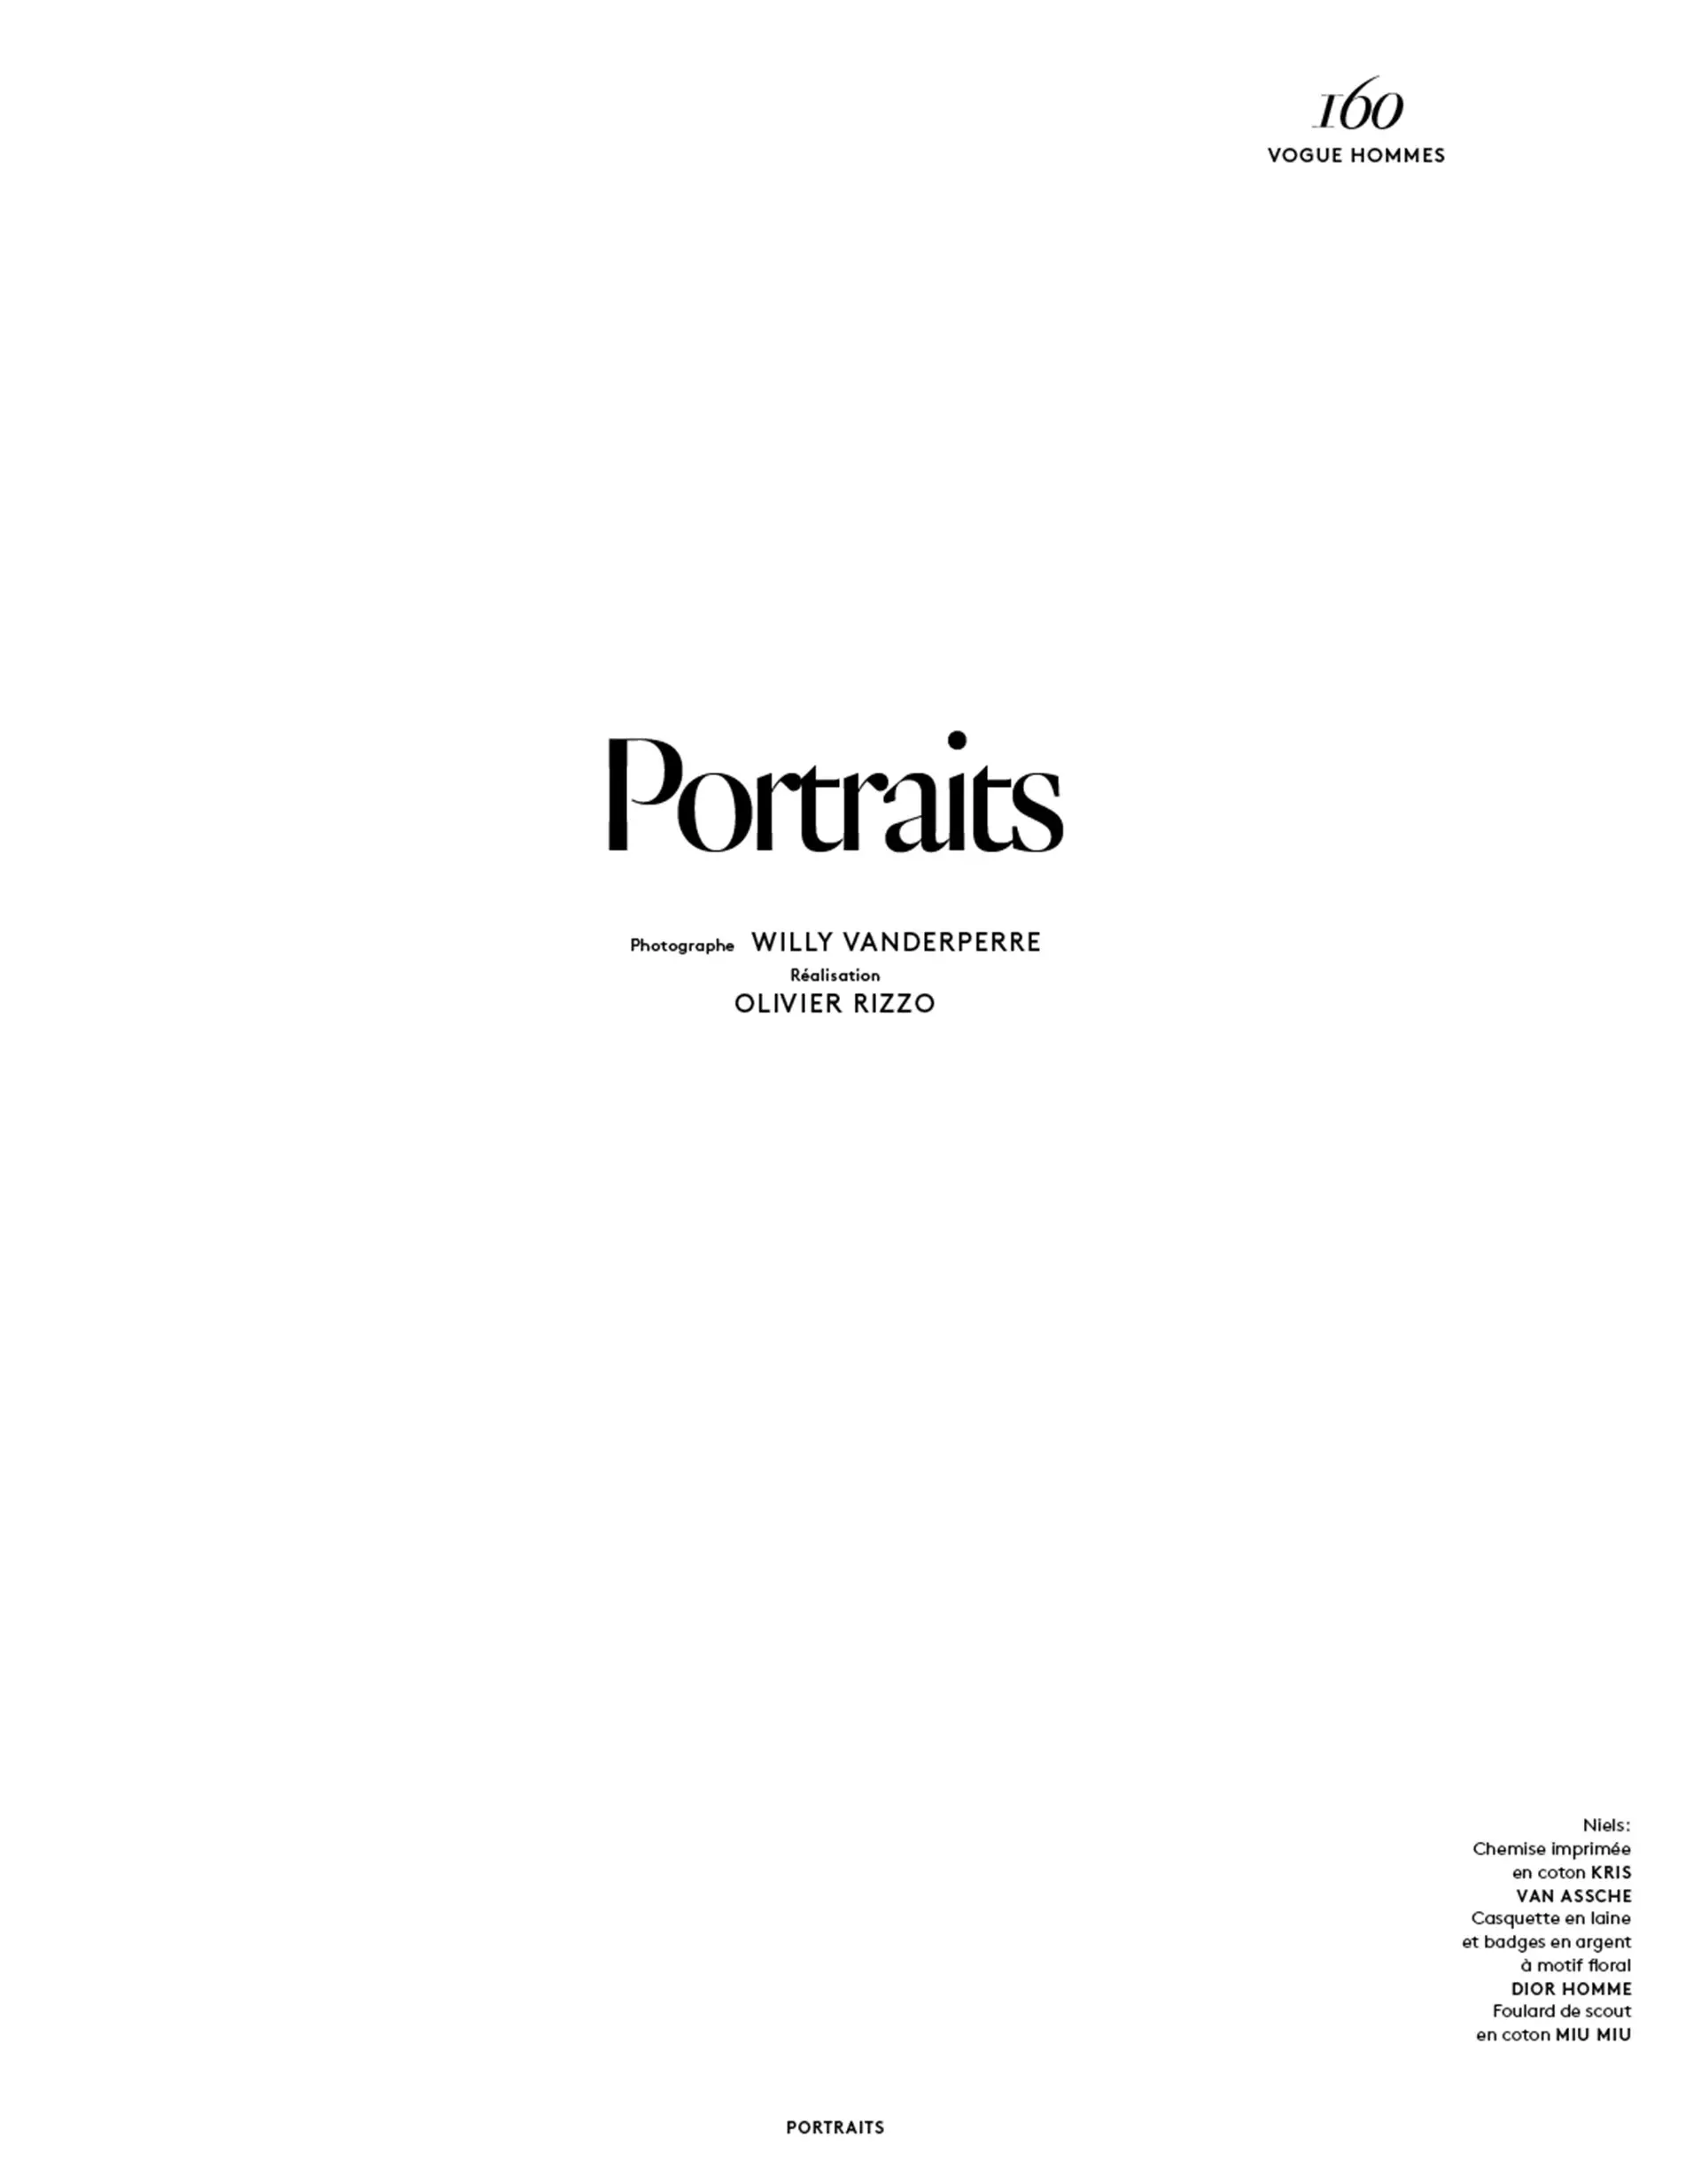 Vogue Hommes International P/E 2015 : Portraits